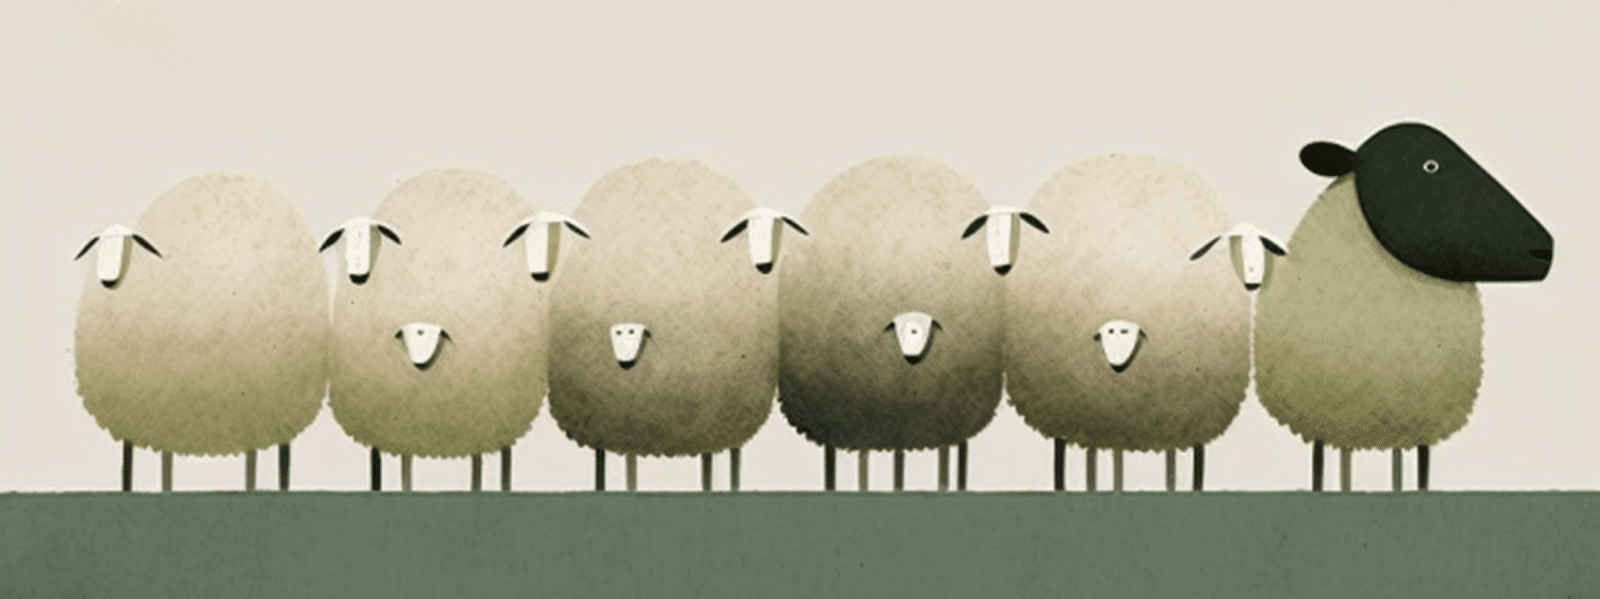 Sheep Clones in a Row